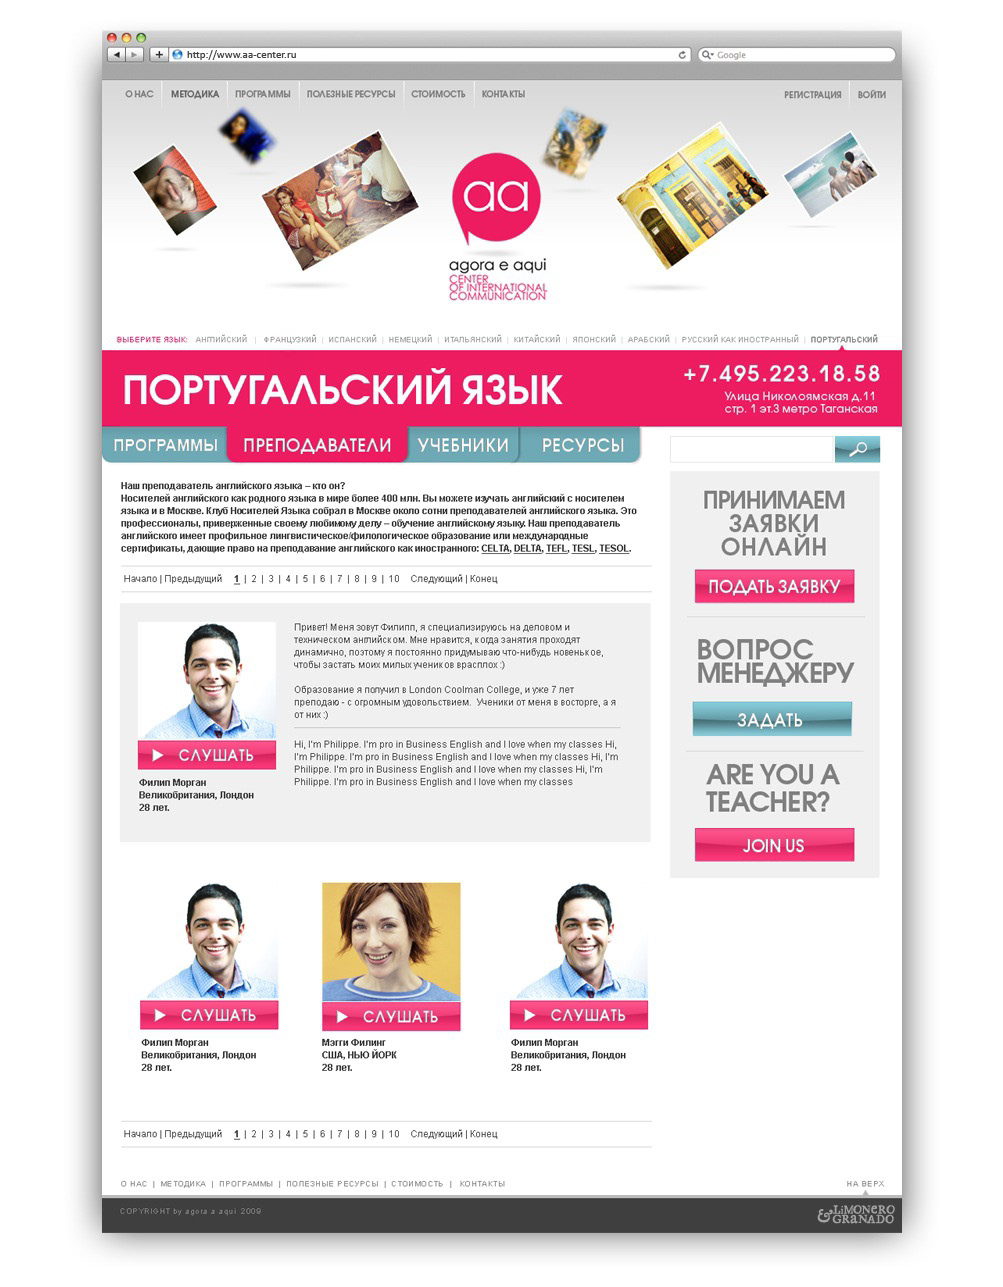 Web-site site corporate communication center aa-center